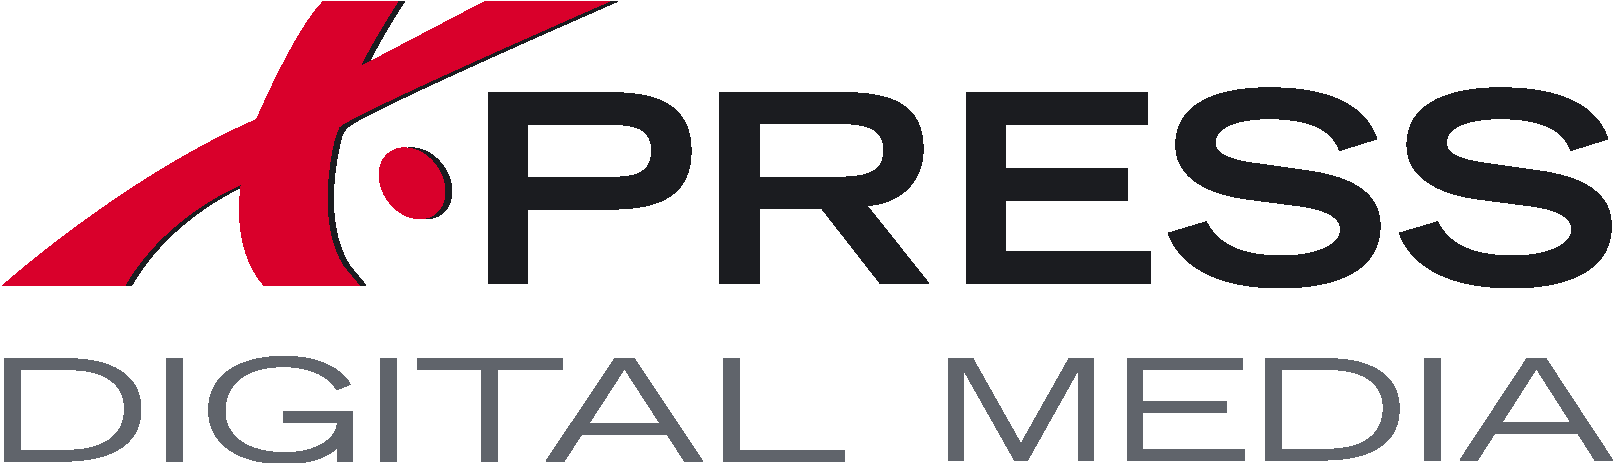 X-Press-Digital Media GmbH Logo